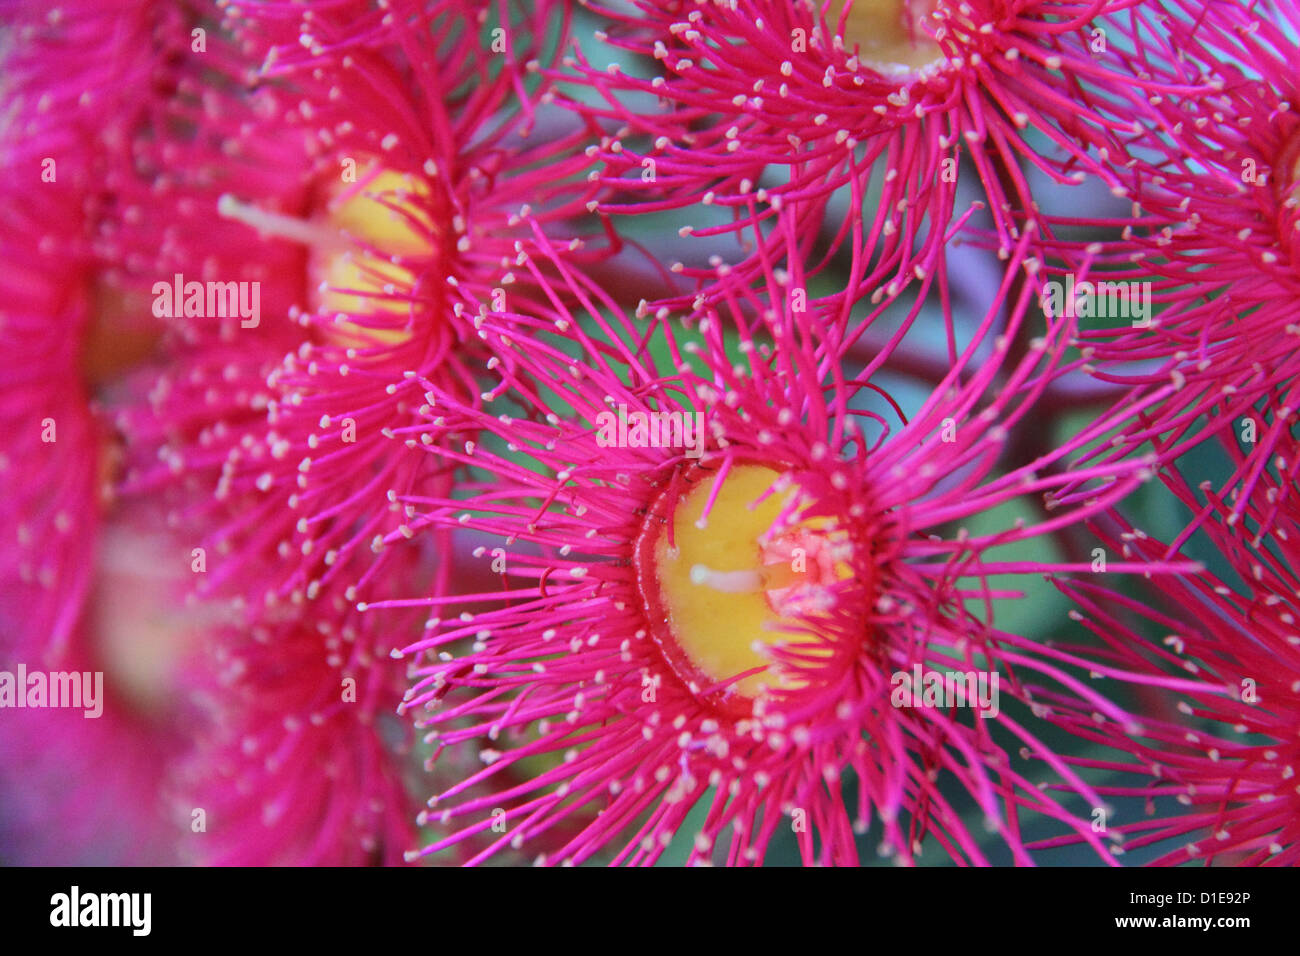 Australian Red Flowering Gum Wattle 'Summer Glory' (Corymbia Ficifolia) Stock Photo